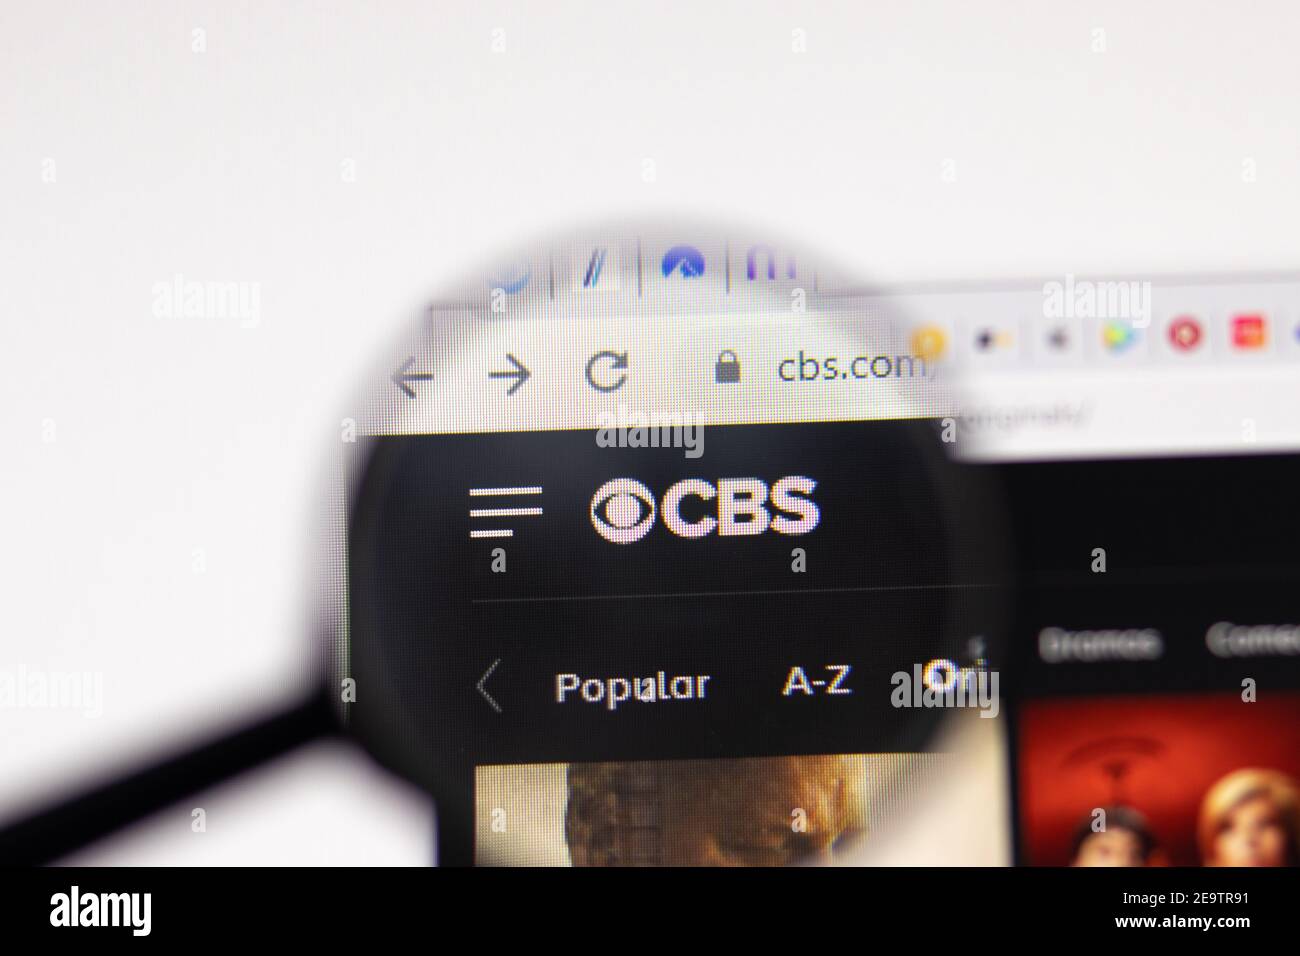 Los Angeles, USA - 1. Februar 2021: CBS Webseite. Cbs.com Logo auf dem Display, illustrative Editorial Stockfoto